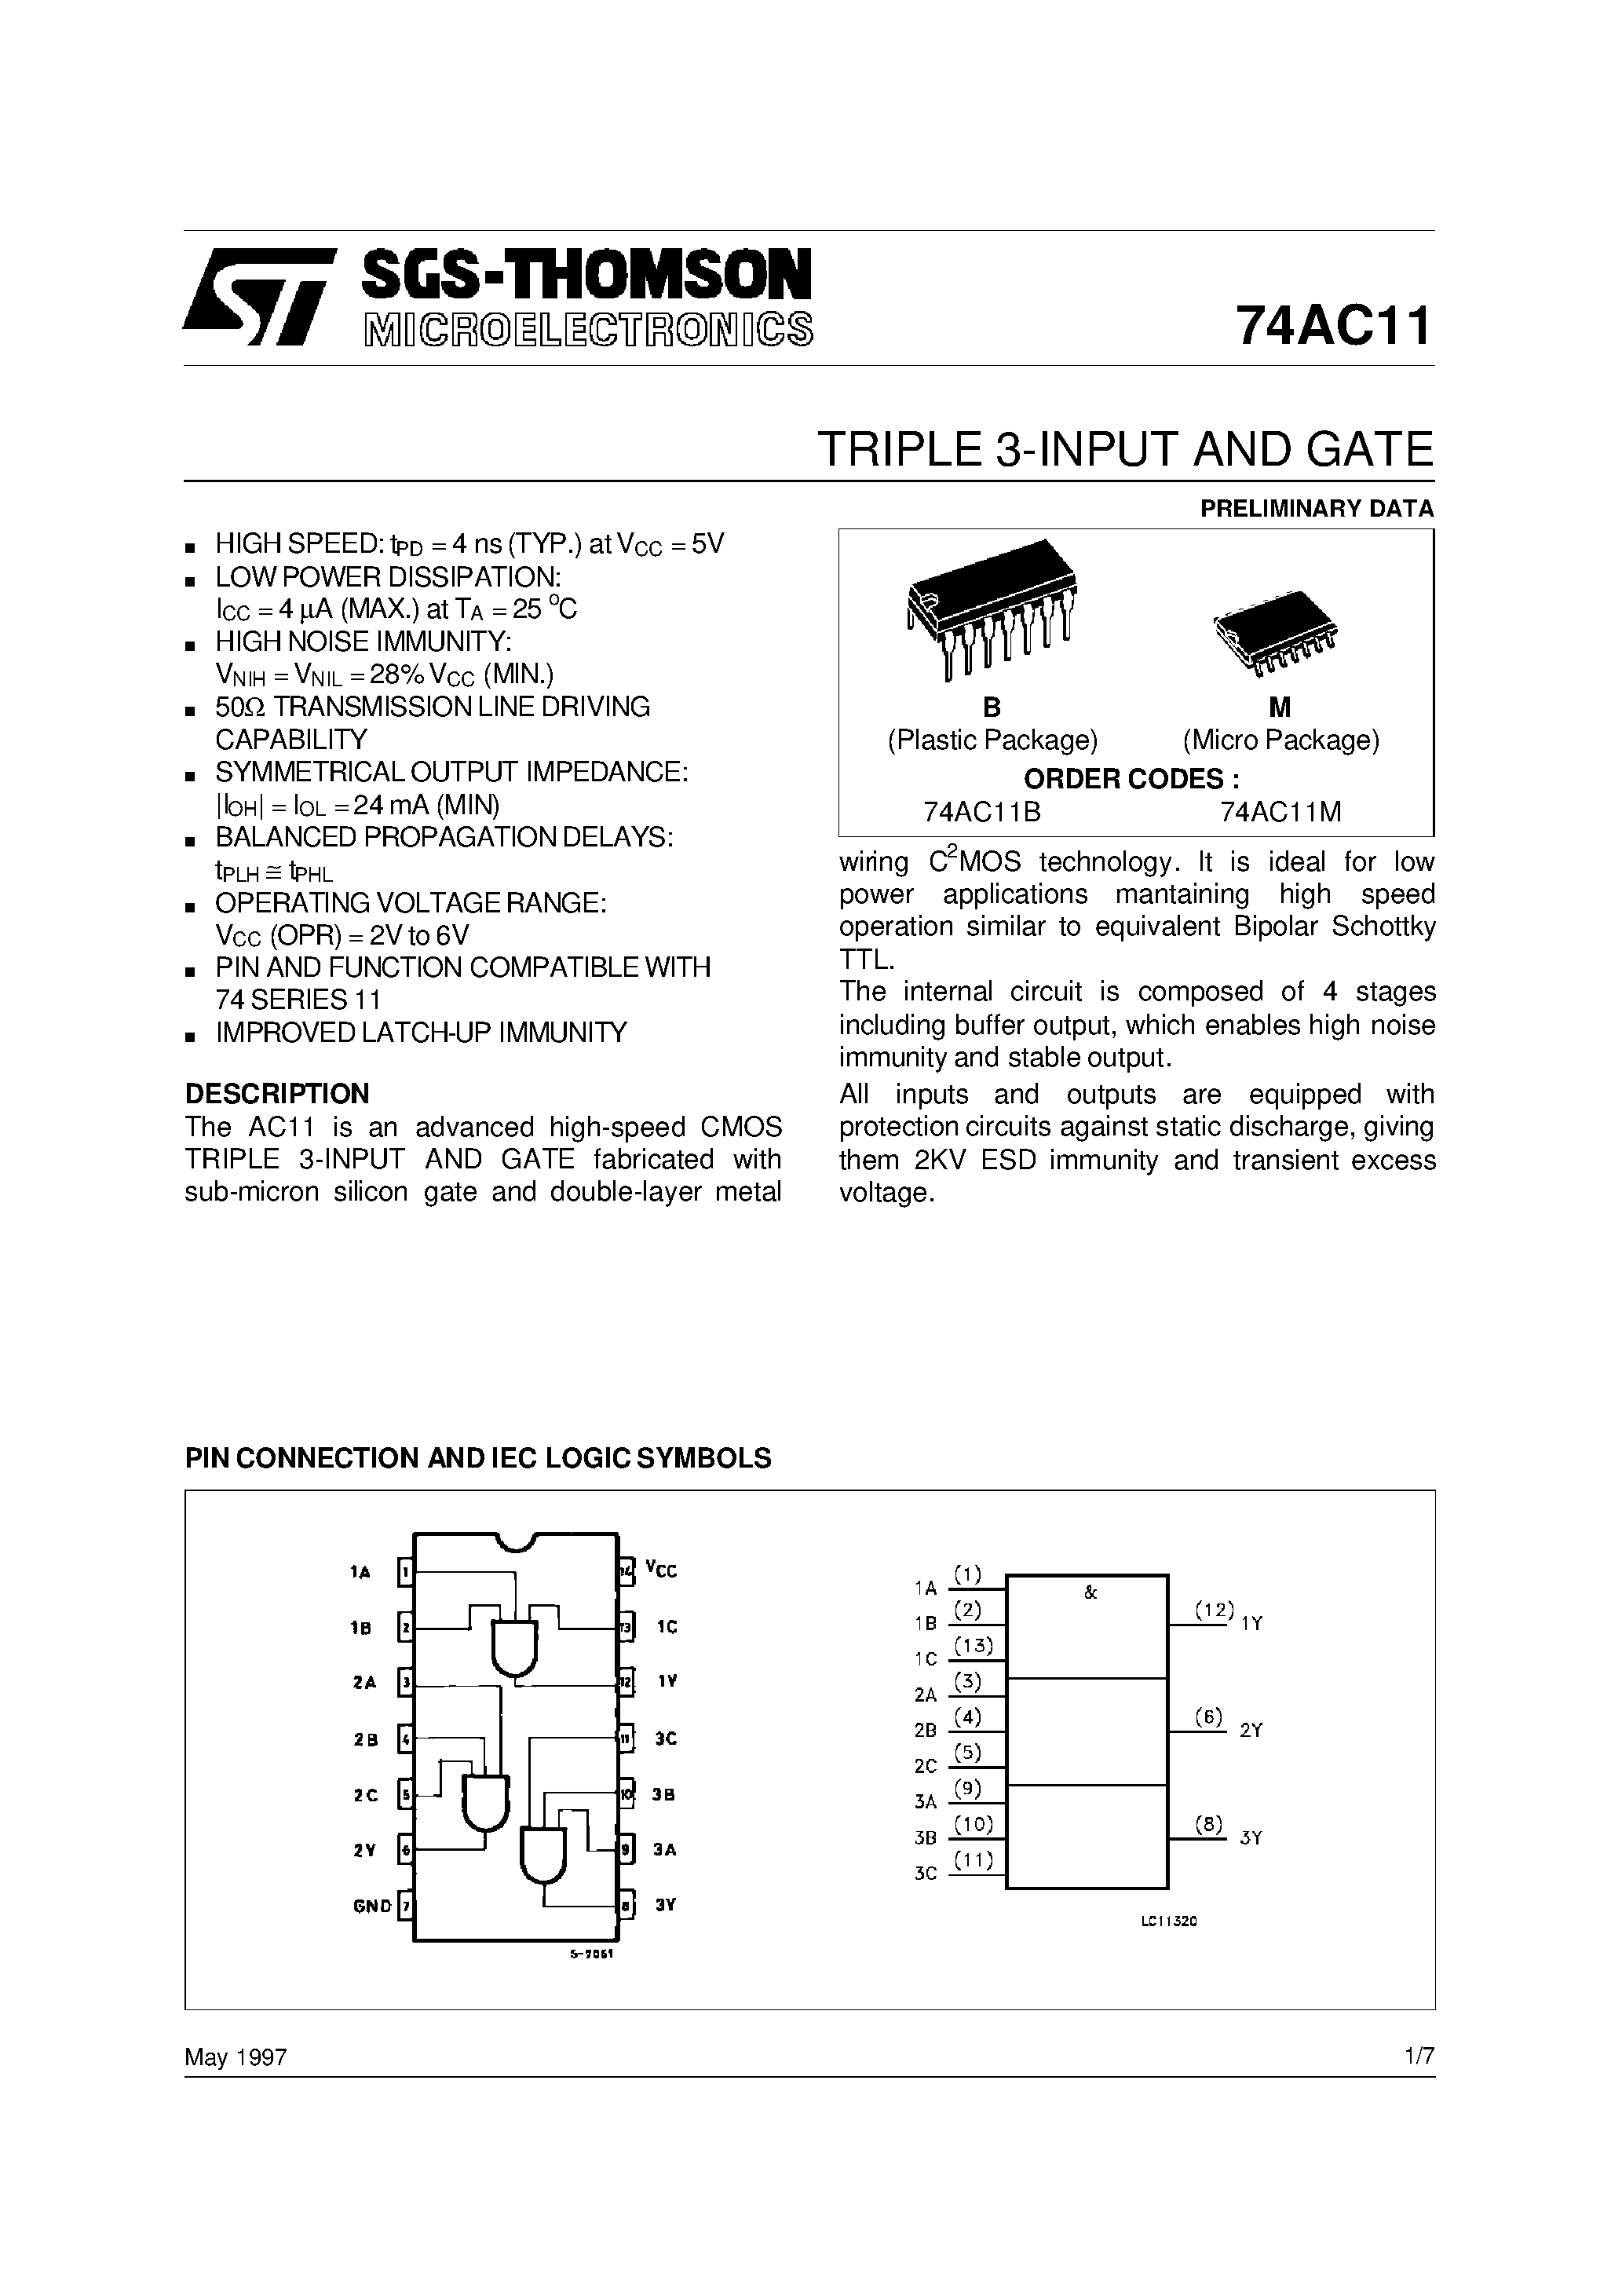 Даташит 74AC11M - TRIPLE 3-INPUT AND GATE страница 1